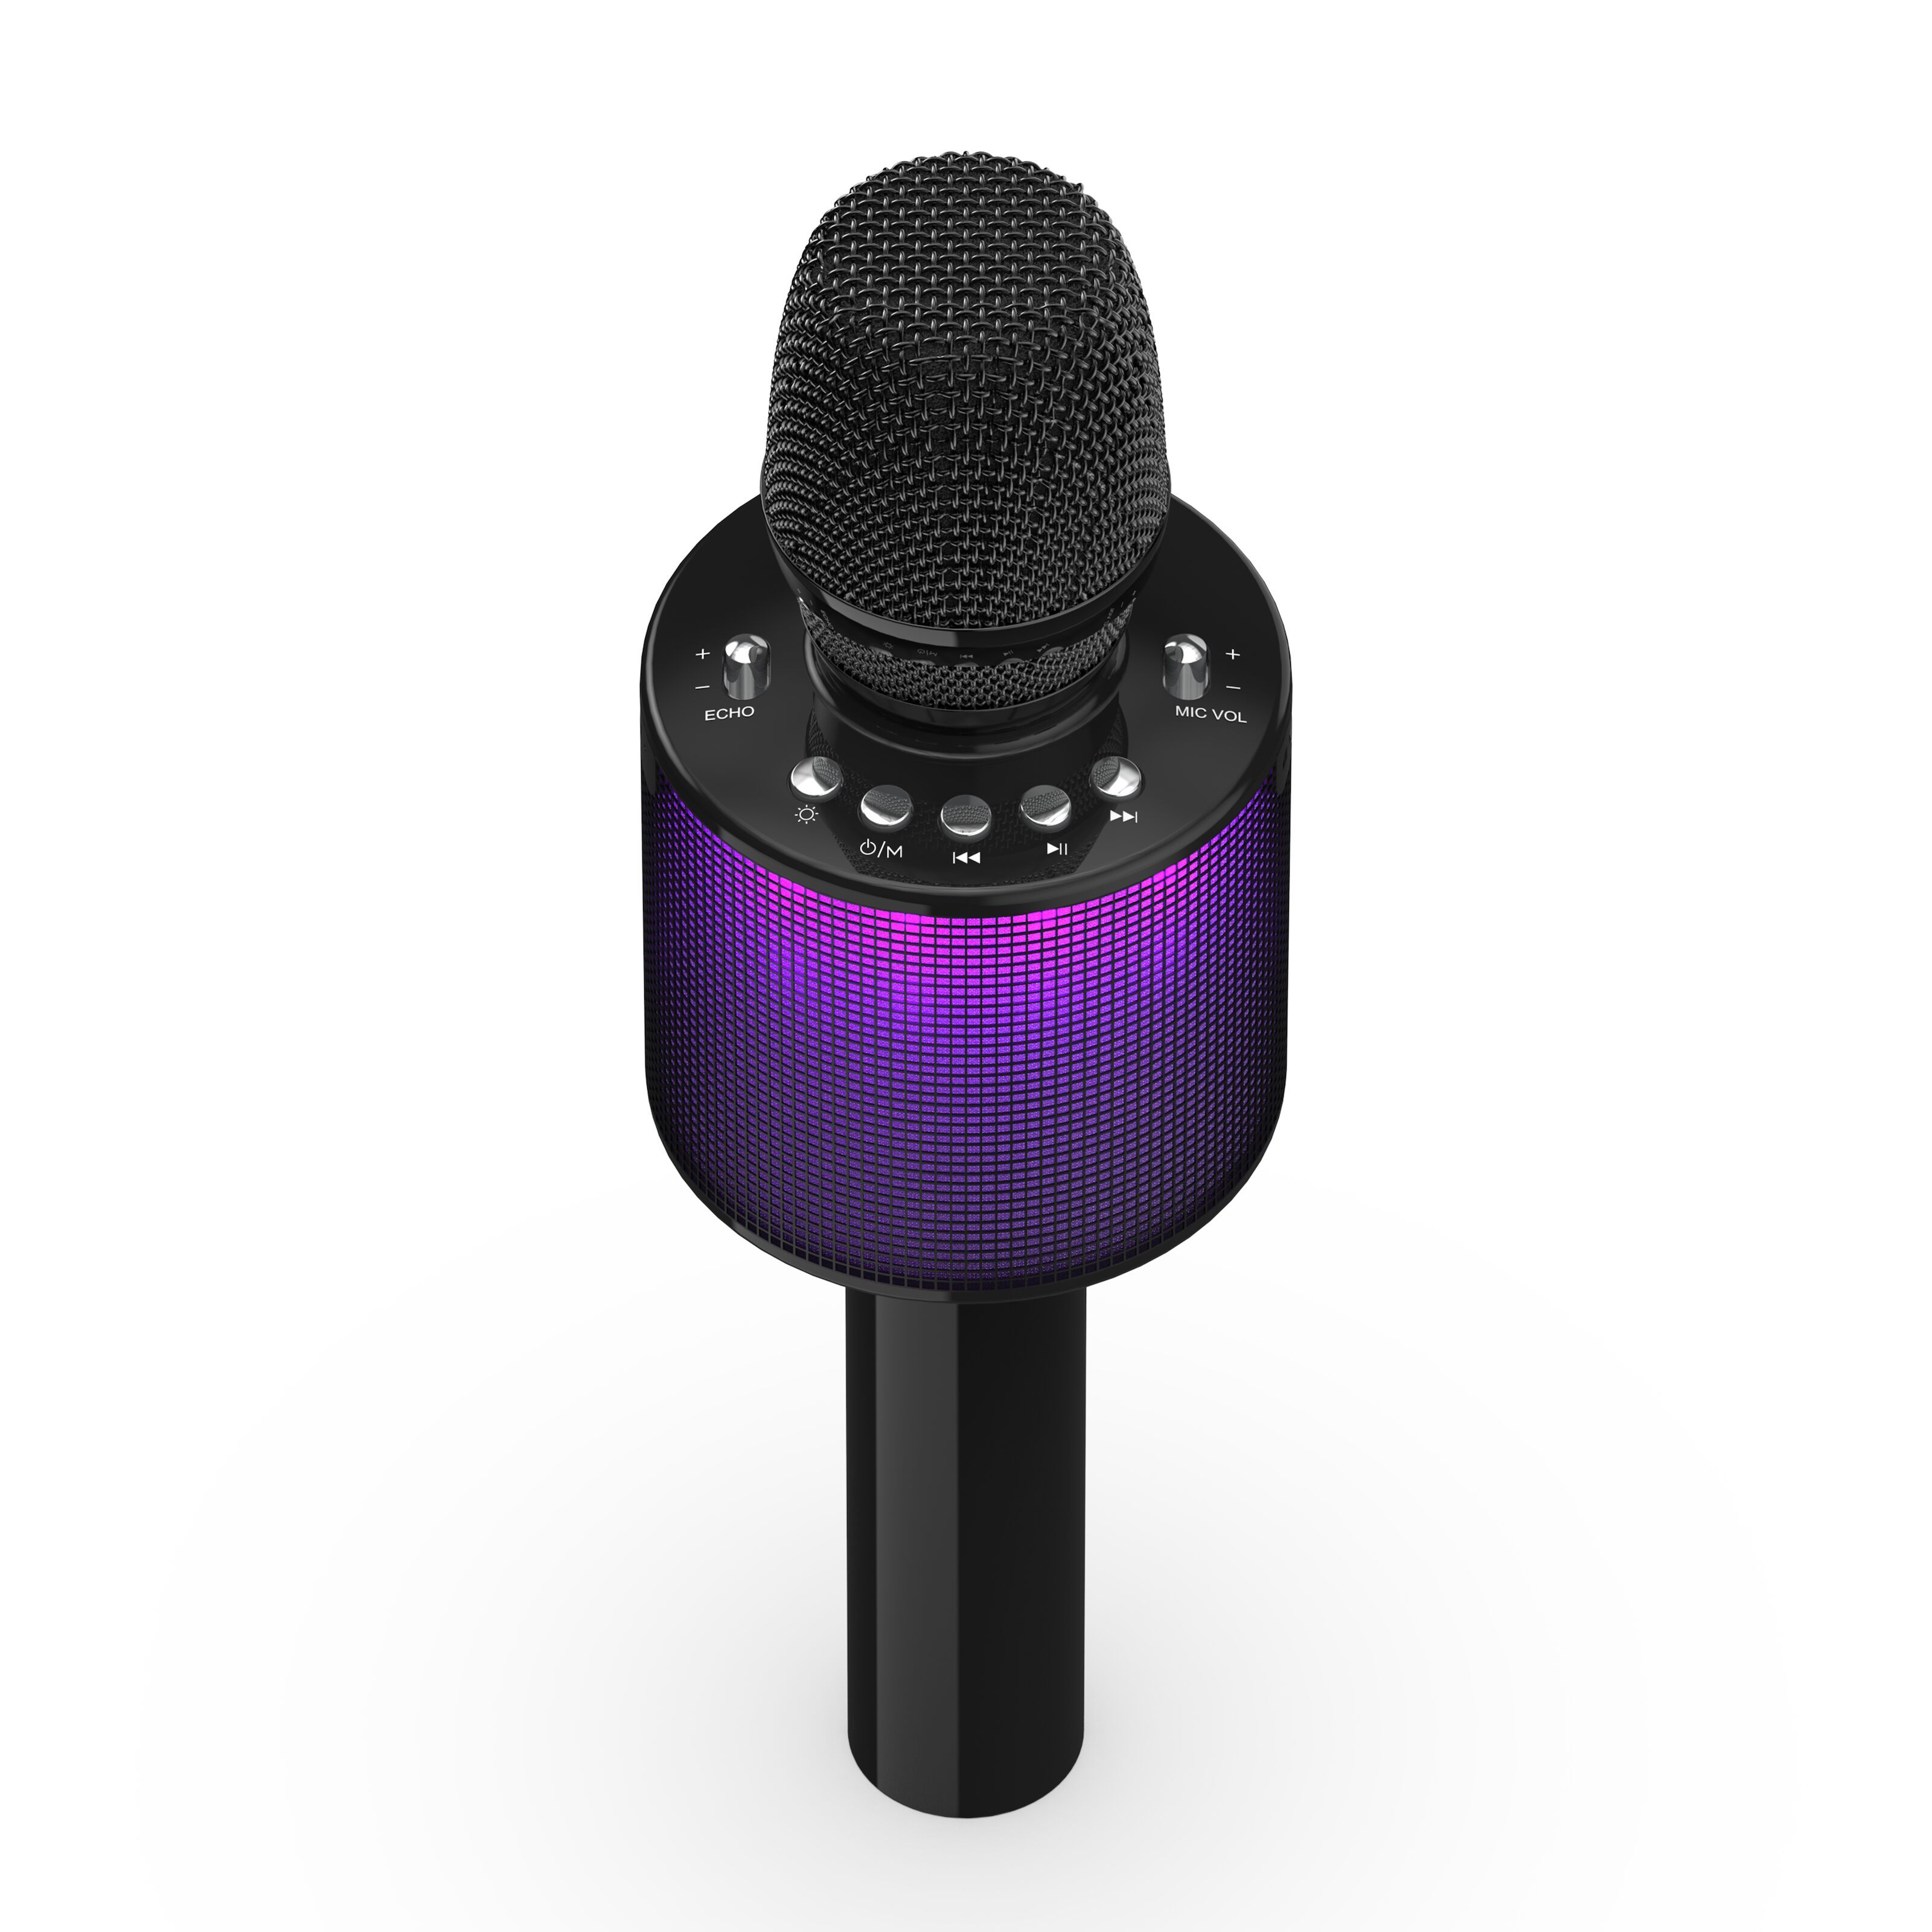 Karaokemikrofon med - Karaoke-utrustning | Kjell.com